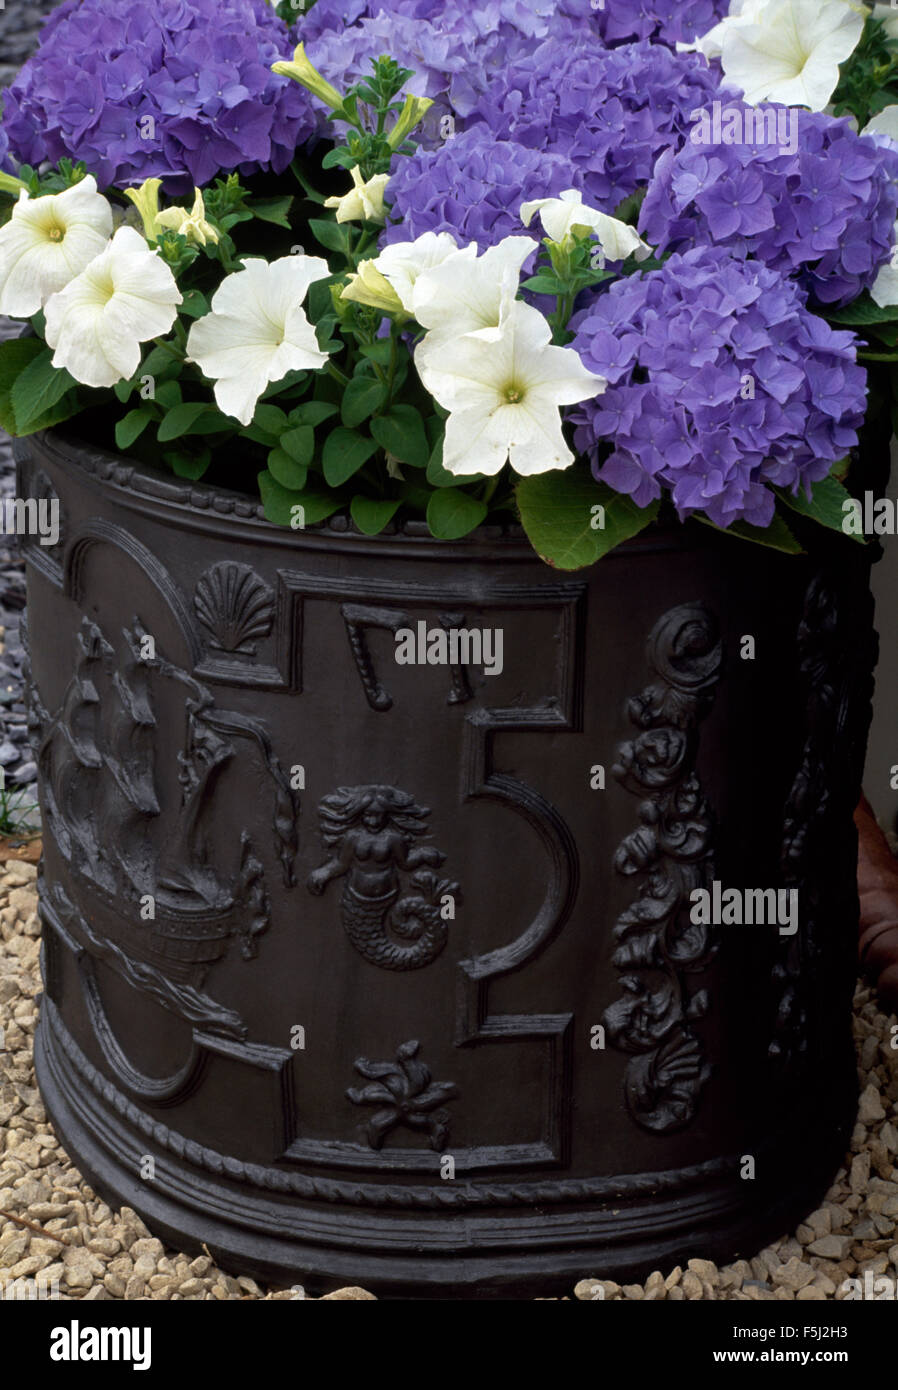 White petunias and deep blue hydrangeas in a decorative cast iron planter Stock Photo